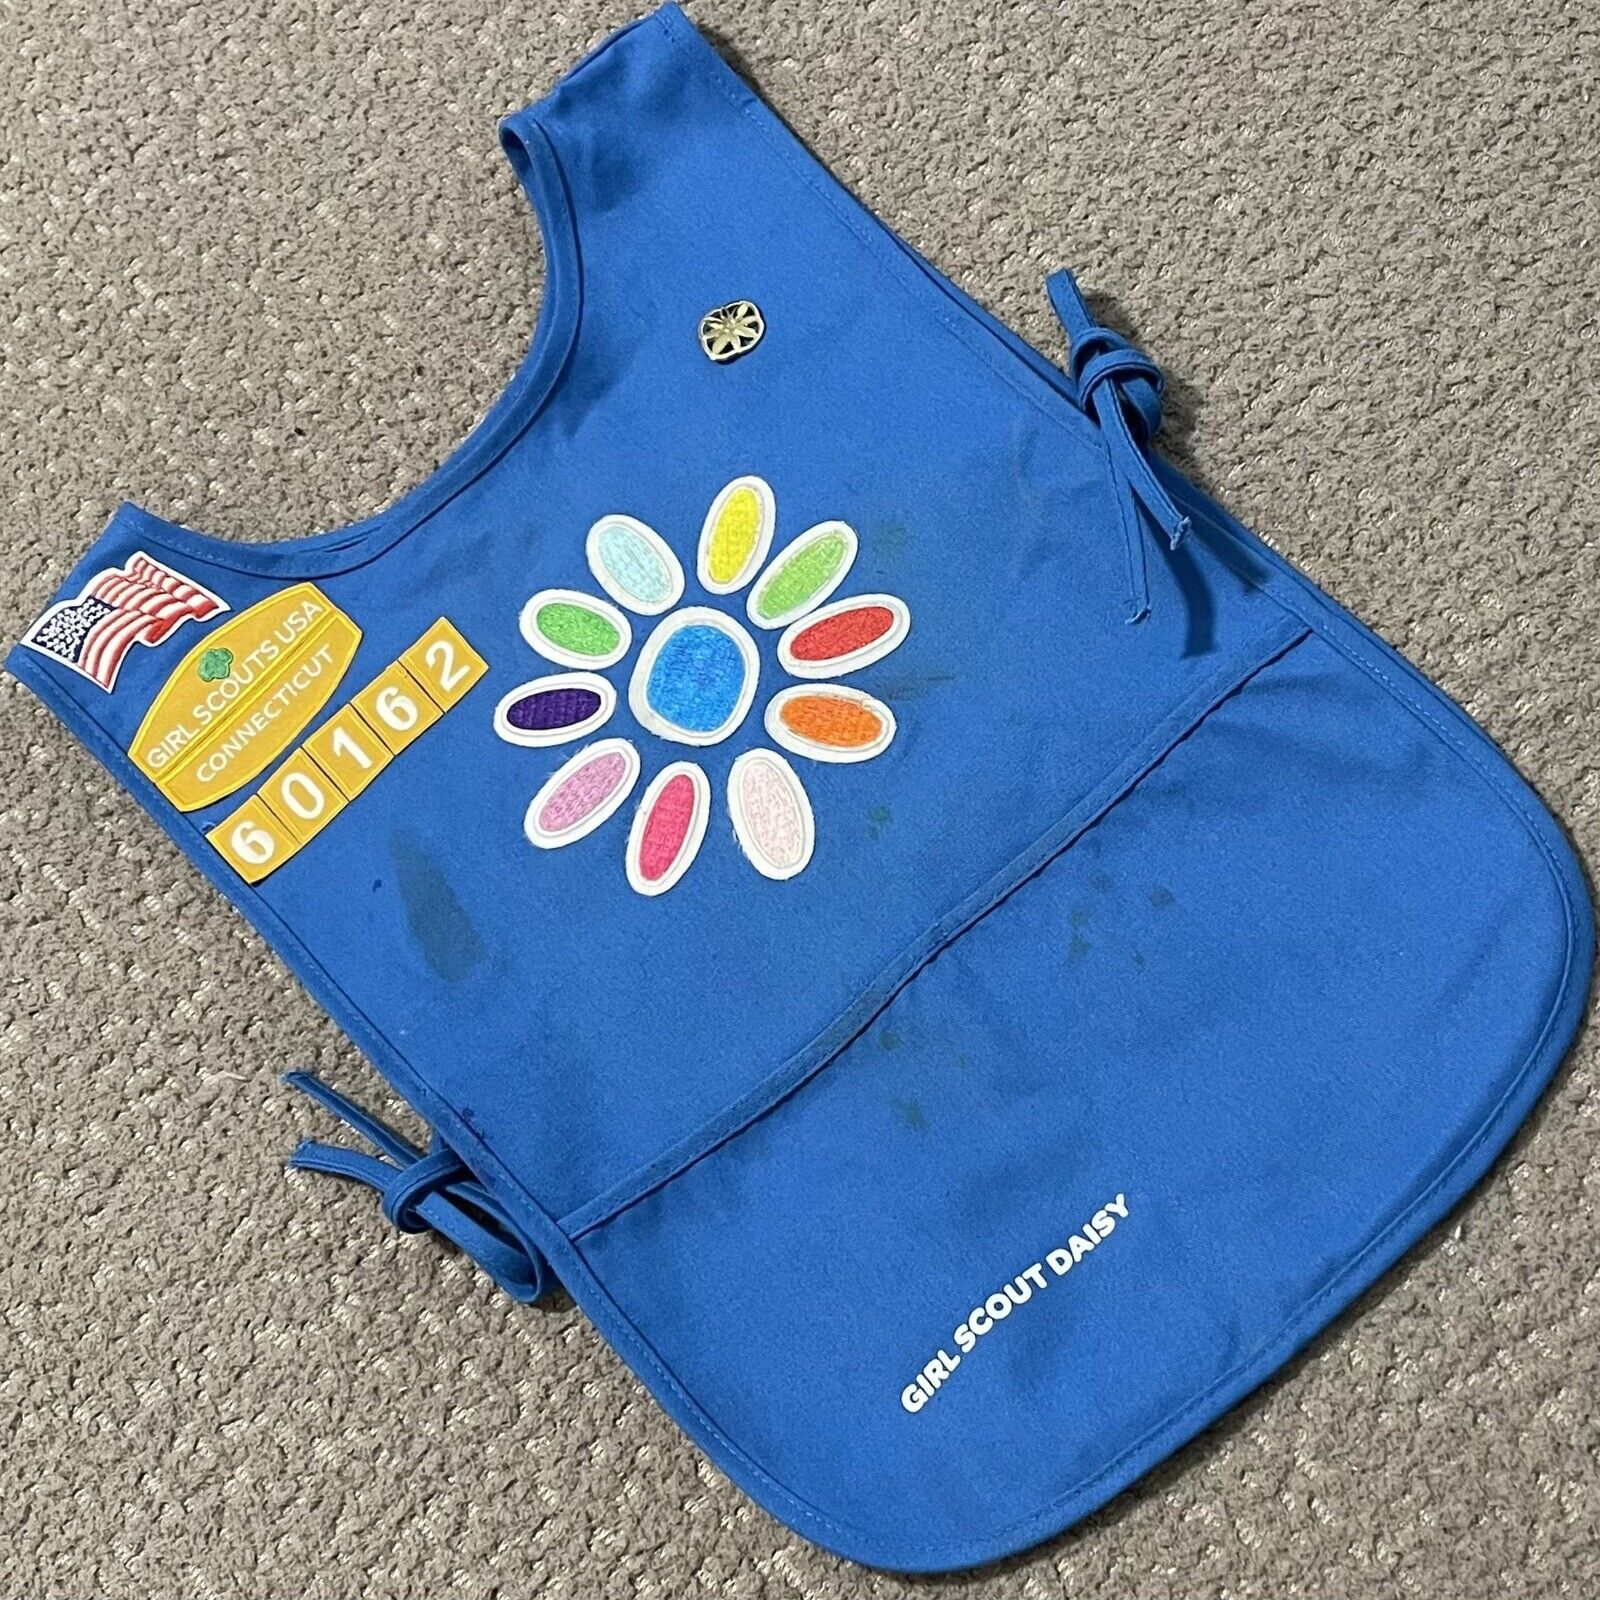 Girl Scouts Daisy Vest Blue Connecticut USA 60162 Badges Patches Pins